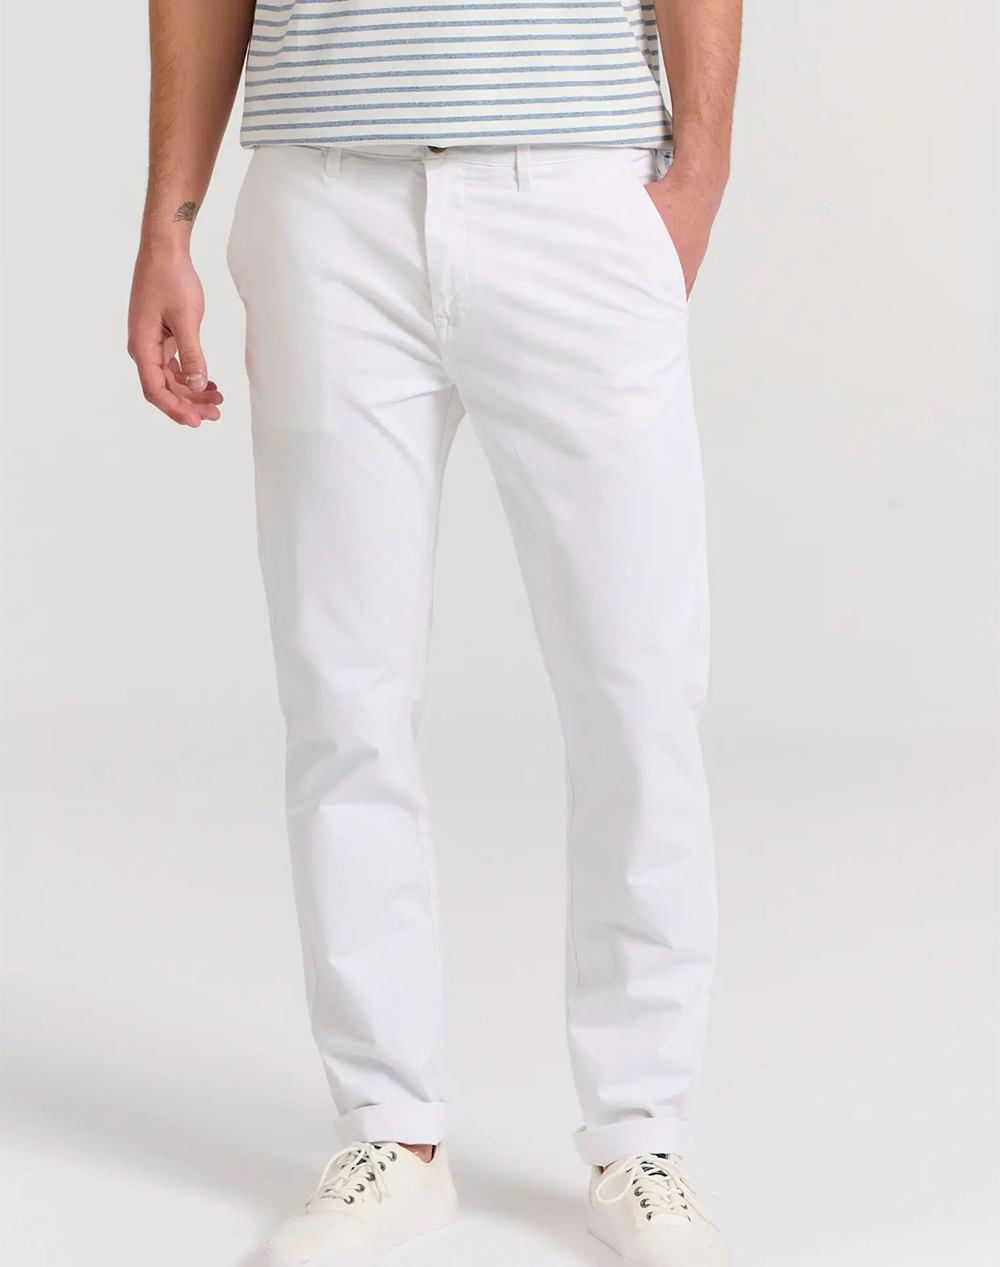 FUNKY BUDDHA Ανδρικό chino παντελόνι – The essentials FBM009-001-02-WHITE White